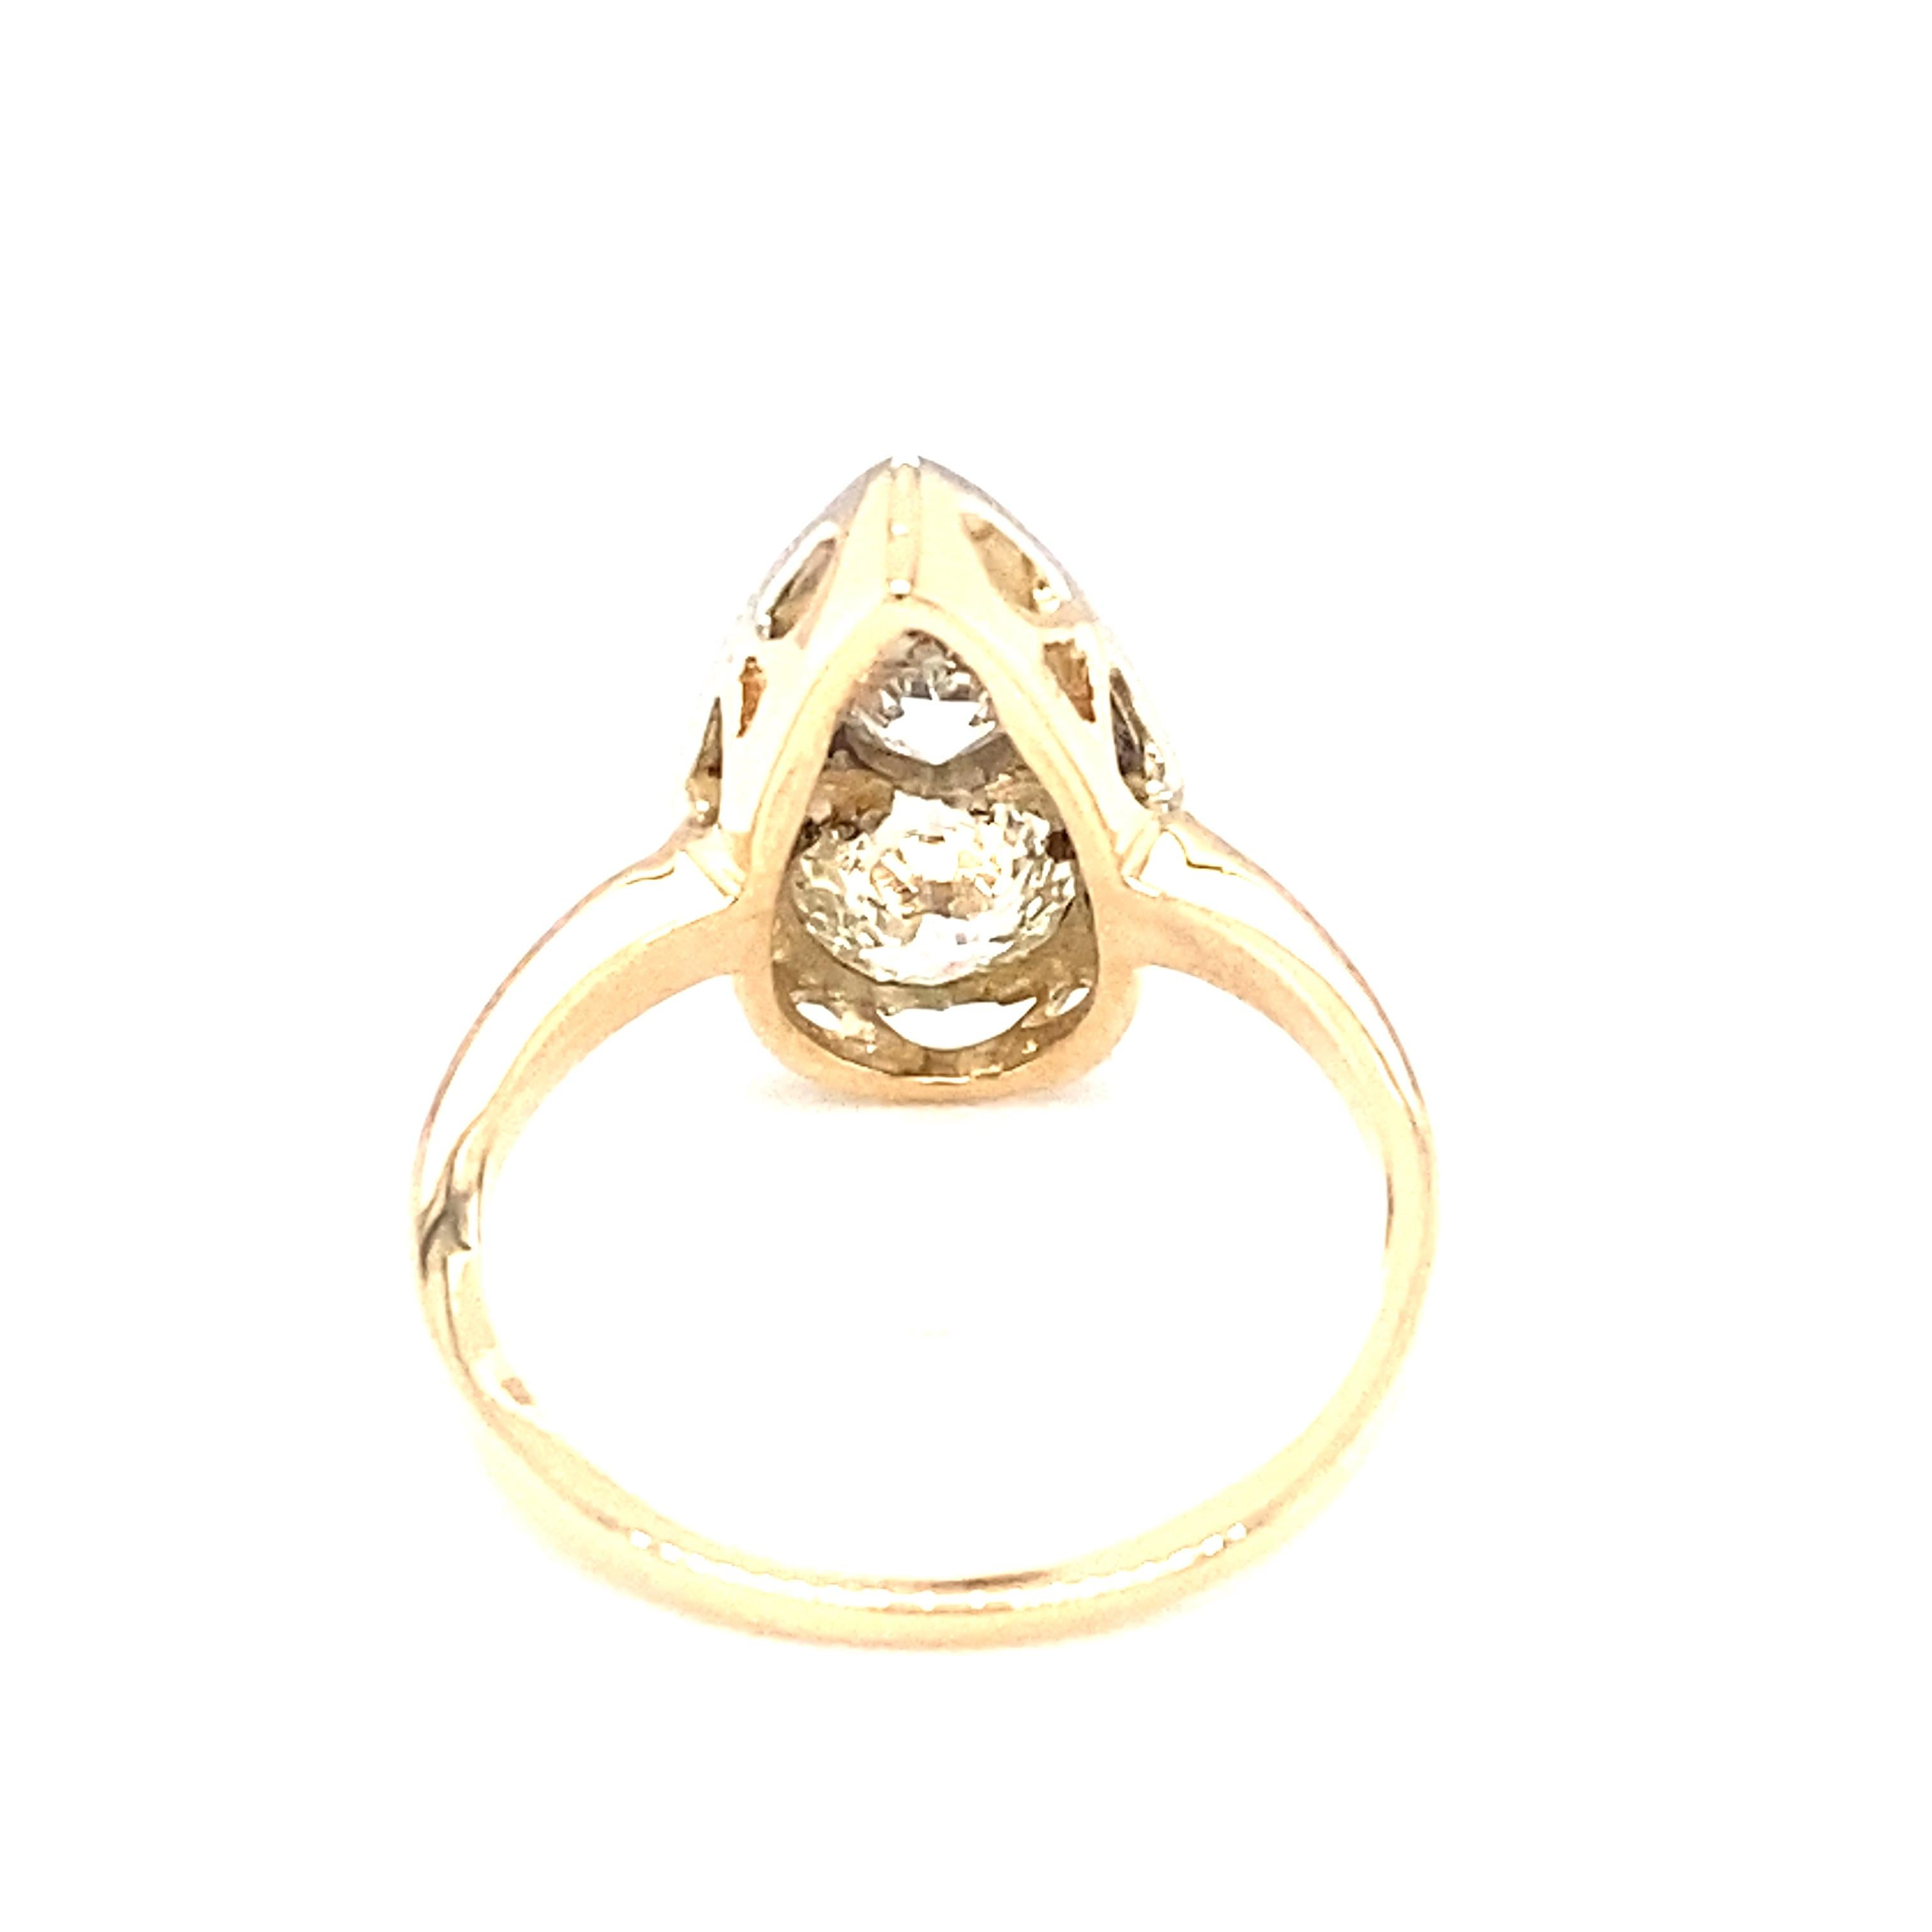 Circa 1920s Art Deco 1.30 Carat Total Diamond Ring in 14 Karat Gold For Sale 2